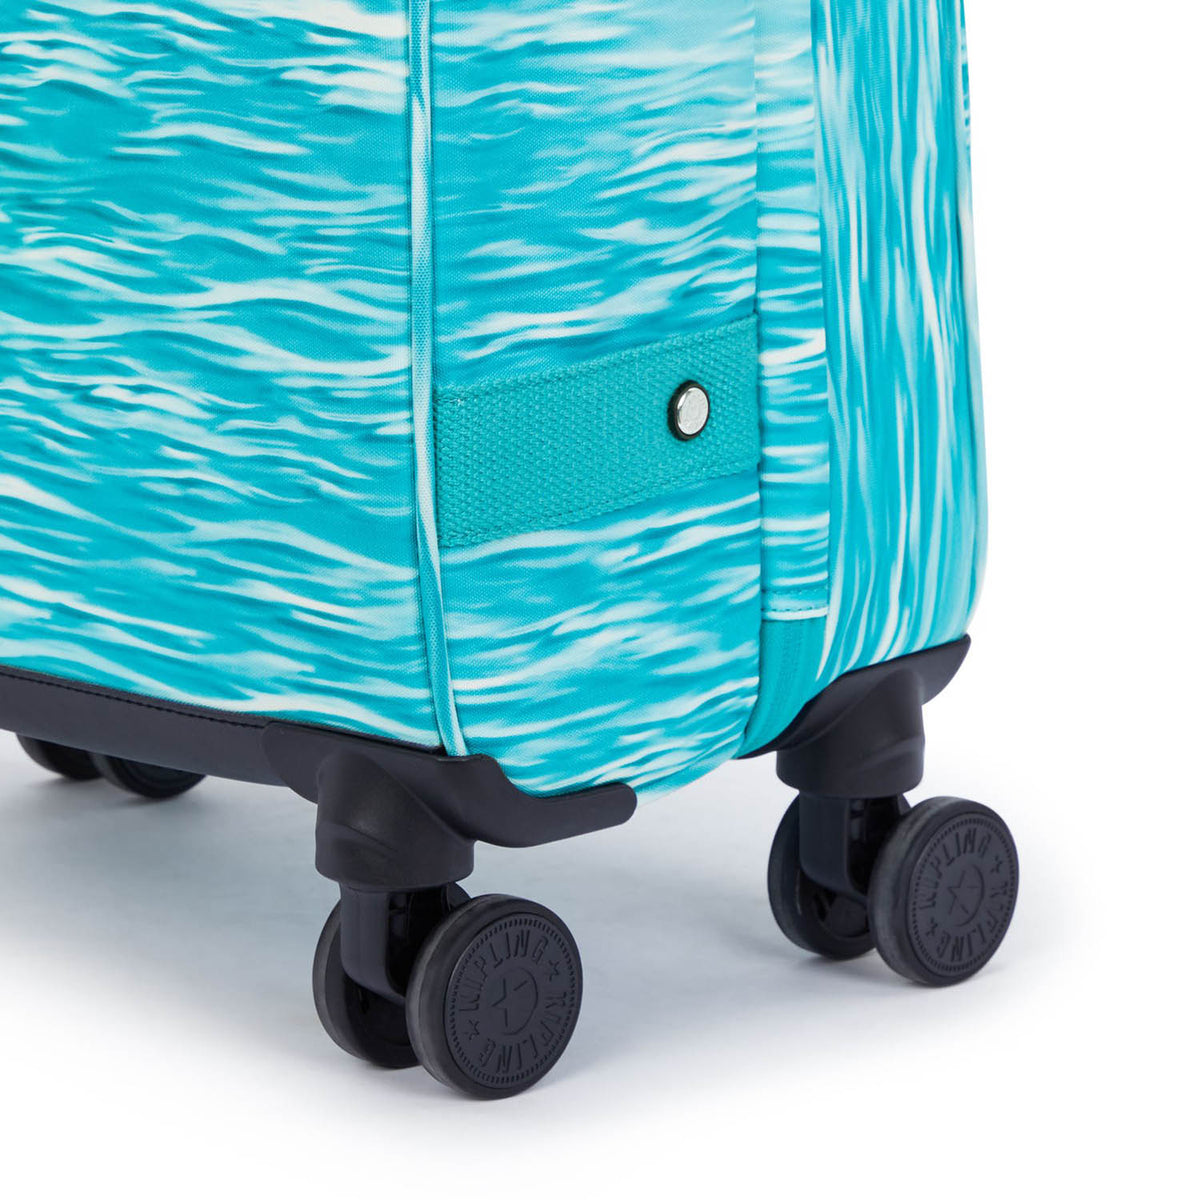 Kipling Spontaneous S Suitcase - Aqua Pool